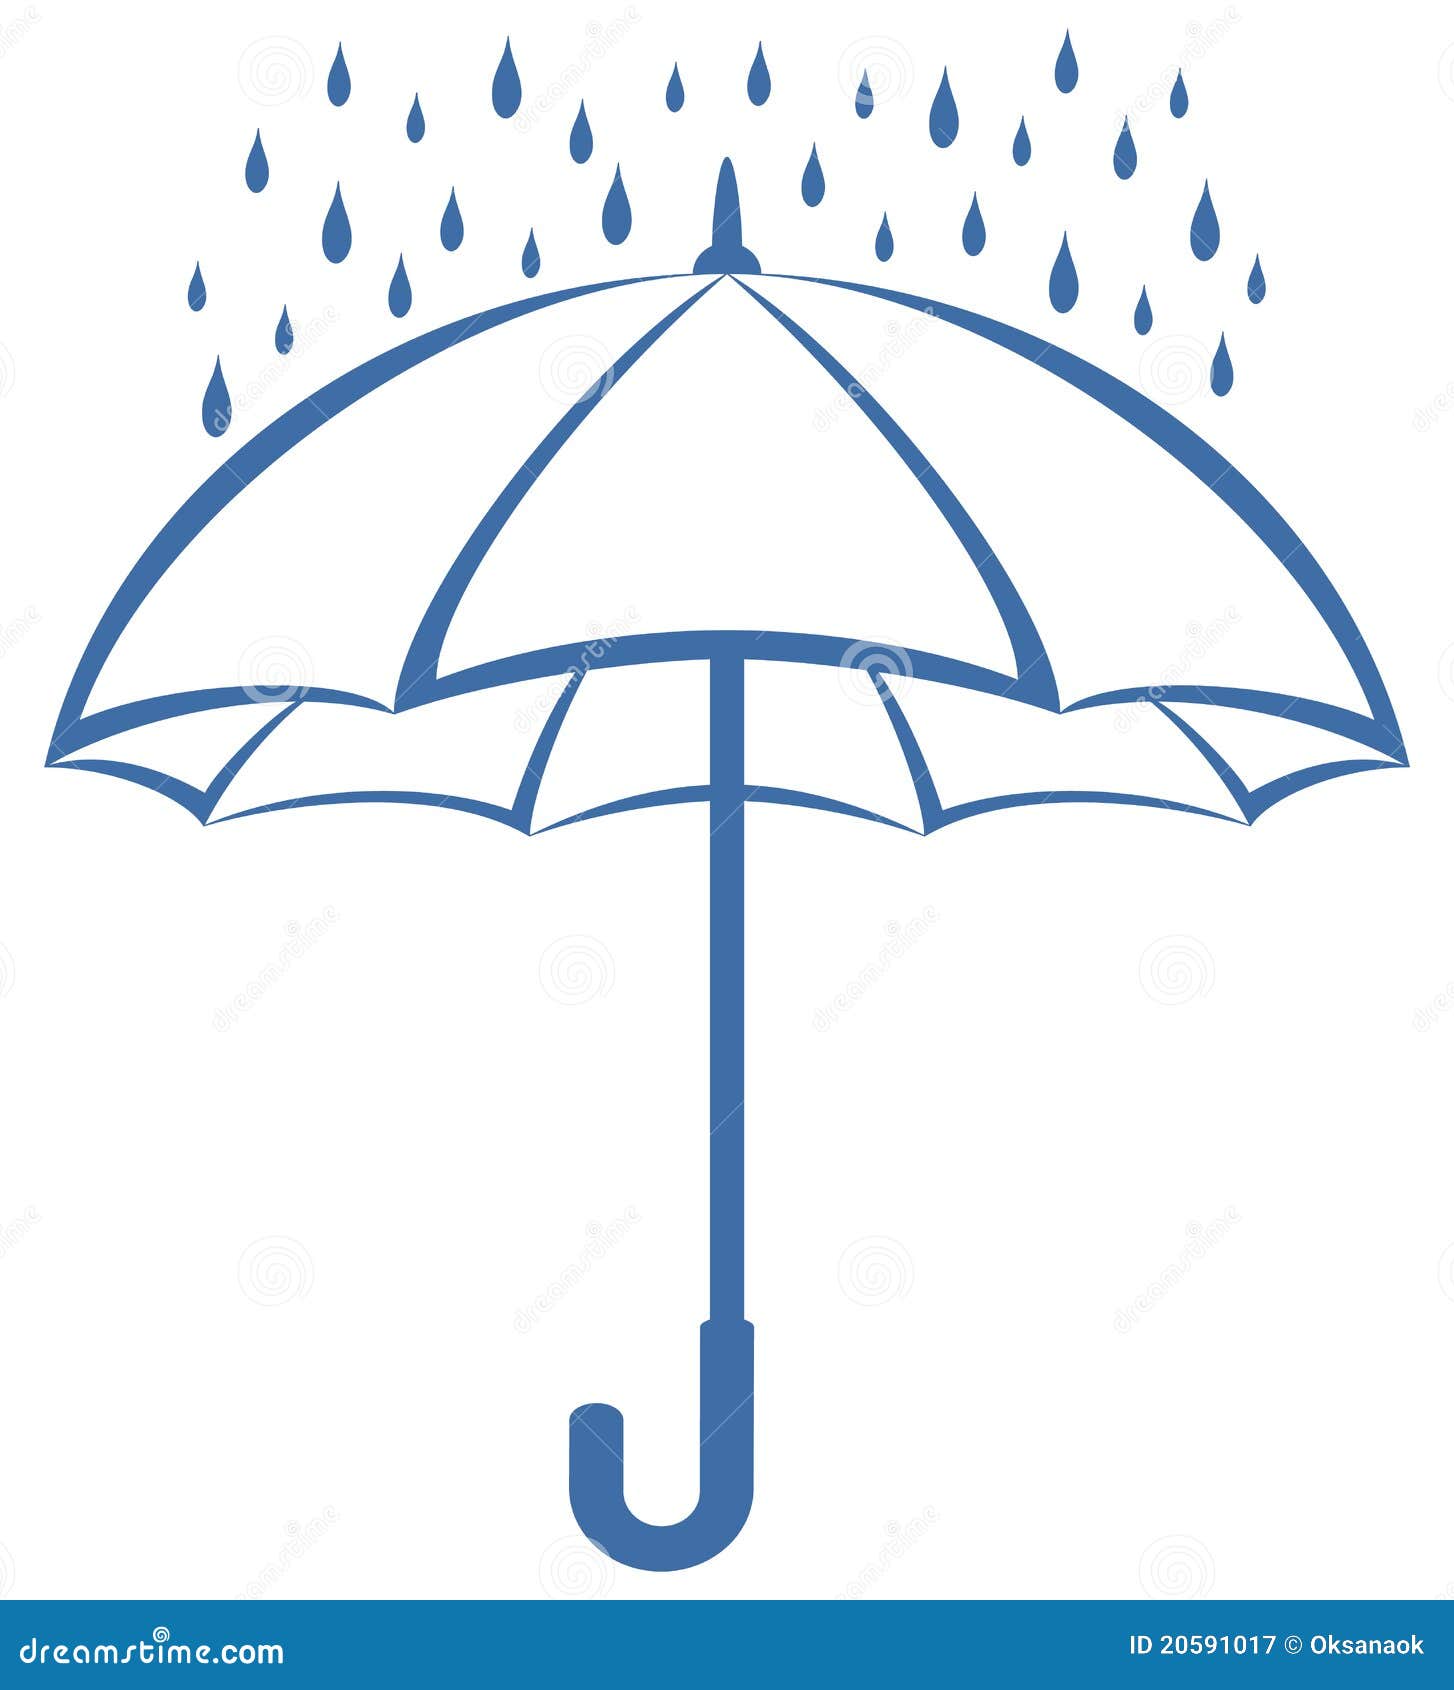 umbrella and rain, pictogram